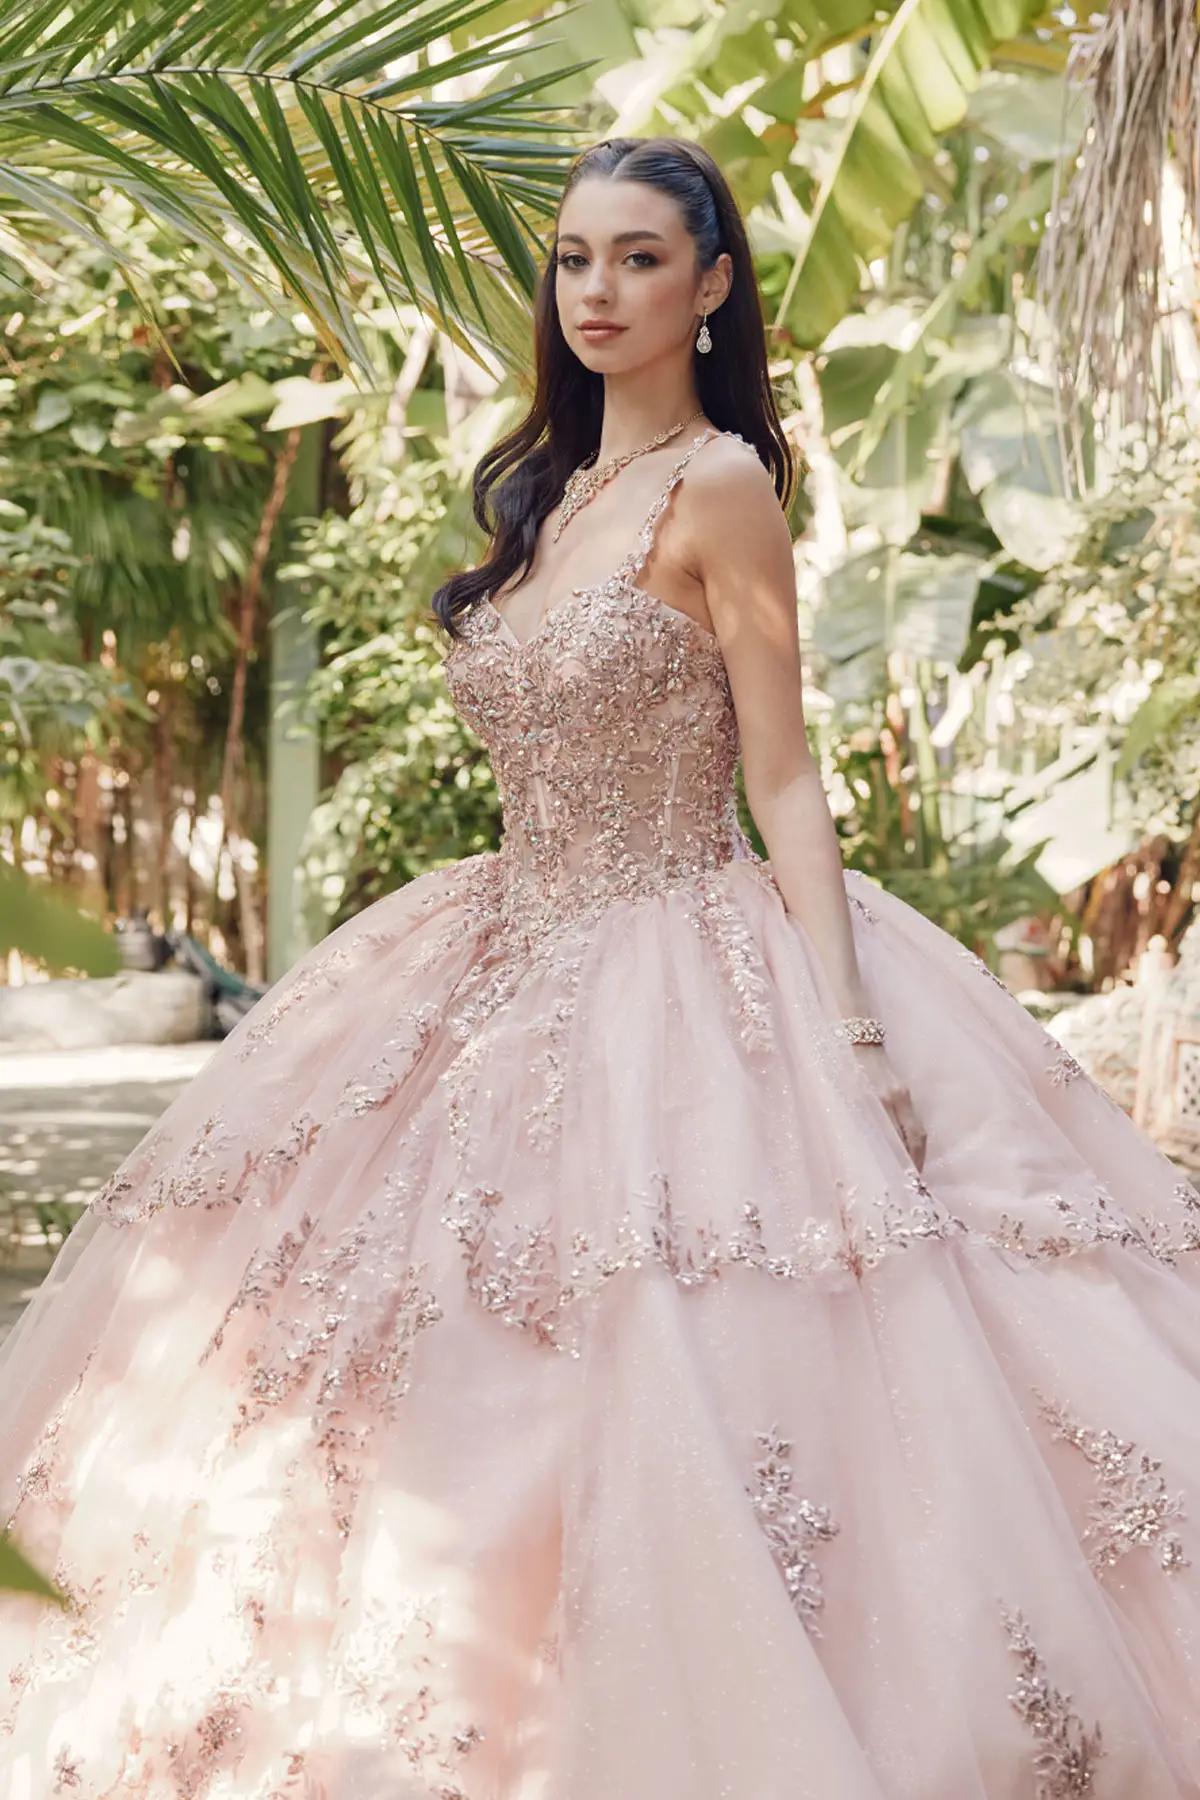 Photo of model wearing a Juliet gown